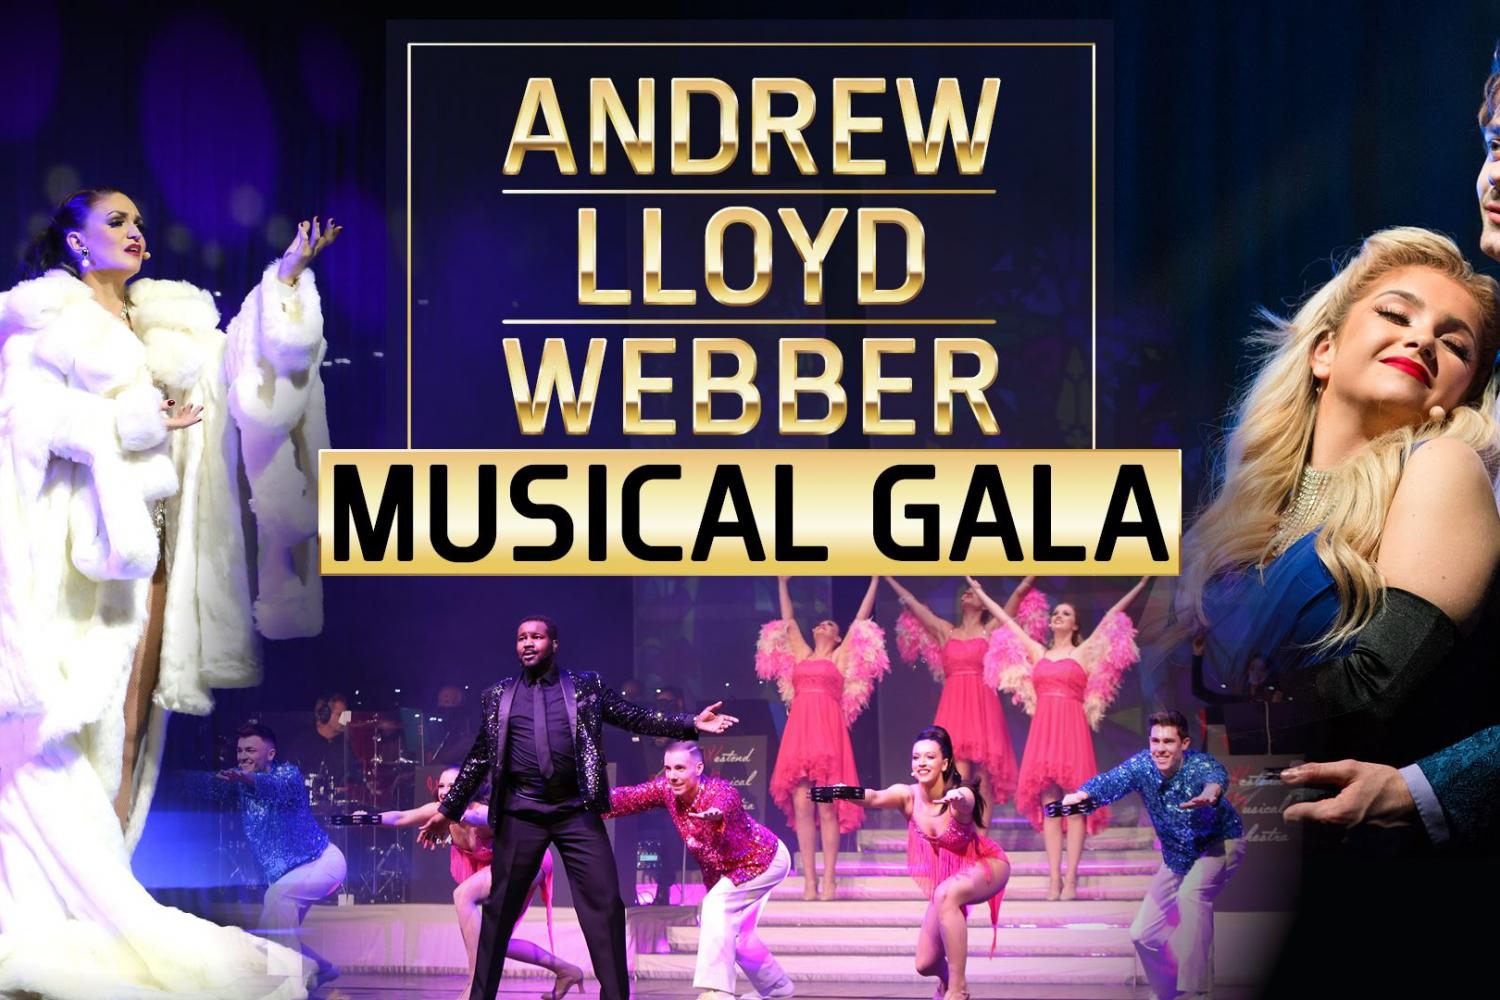 Andrew Lloyd Webber musical gala